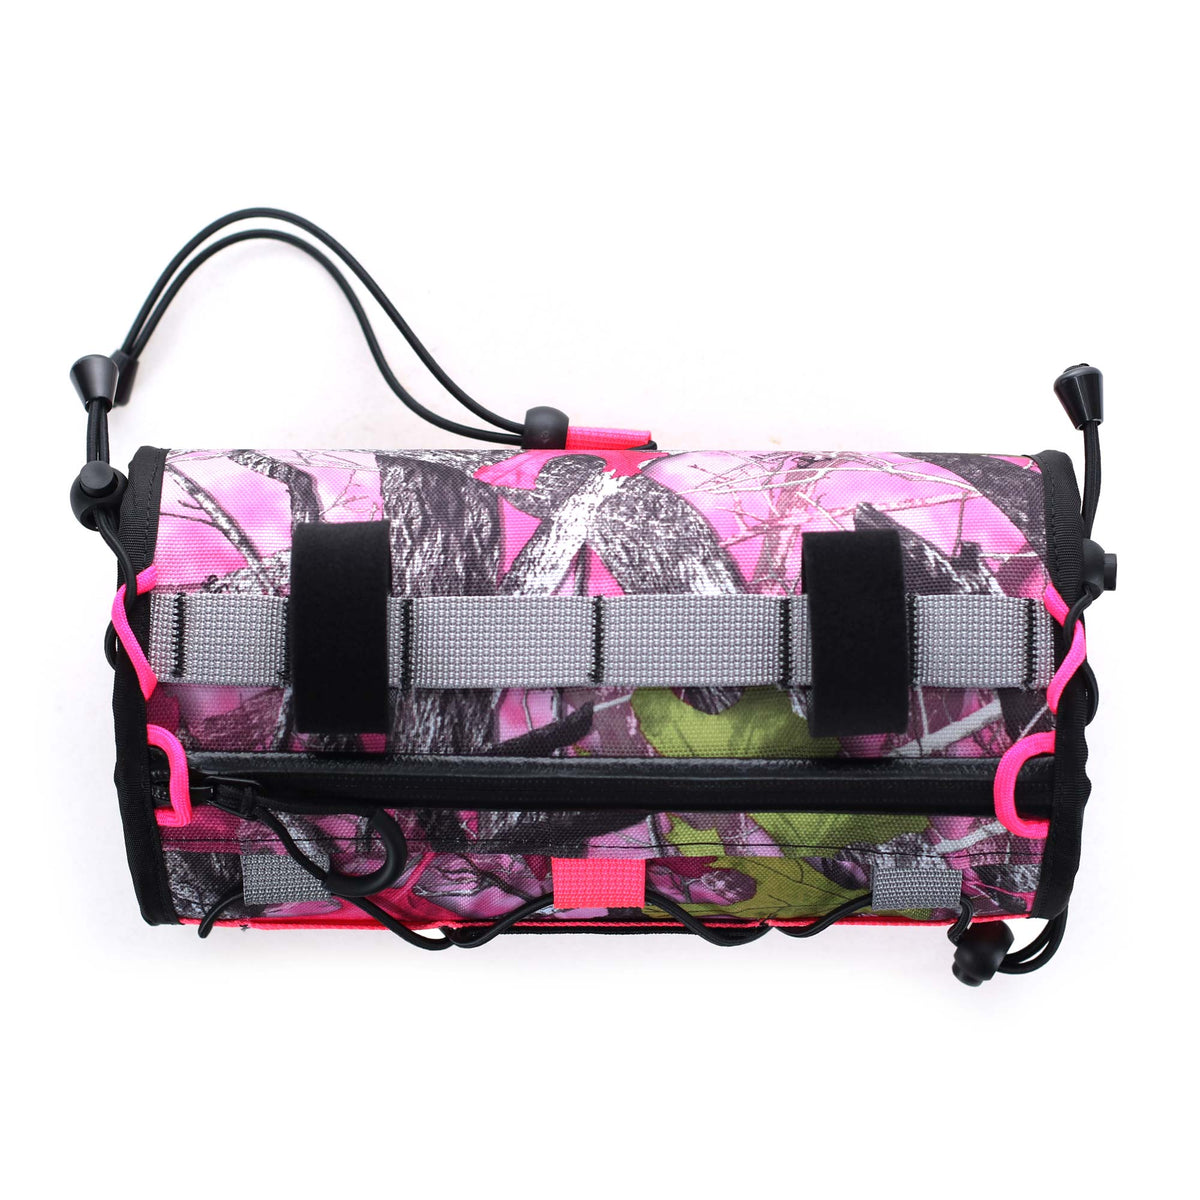 skingrowsback lunchbox handlebar bag gravel cycling made in australia sassy b pink camo